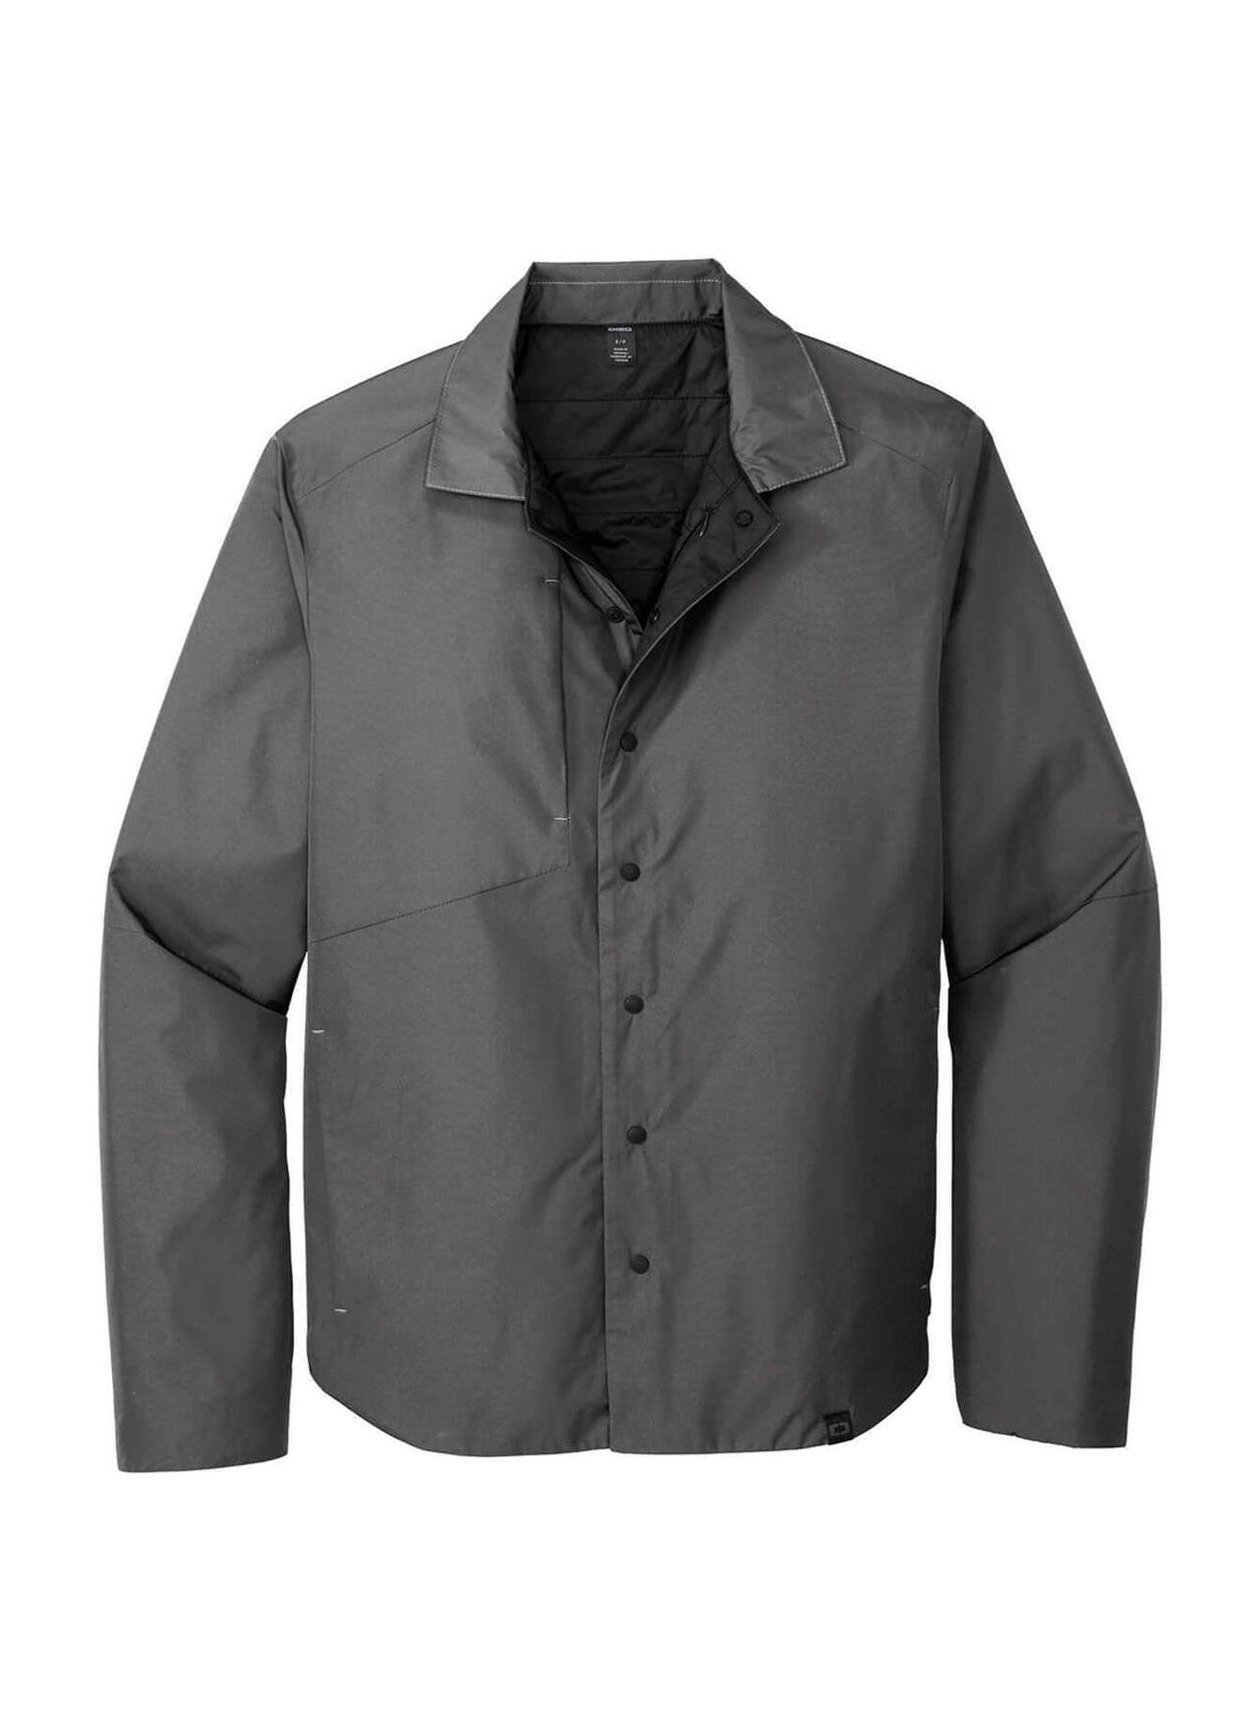 OGIO Men's Gear Grey Reverse Shirt Jacket